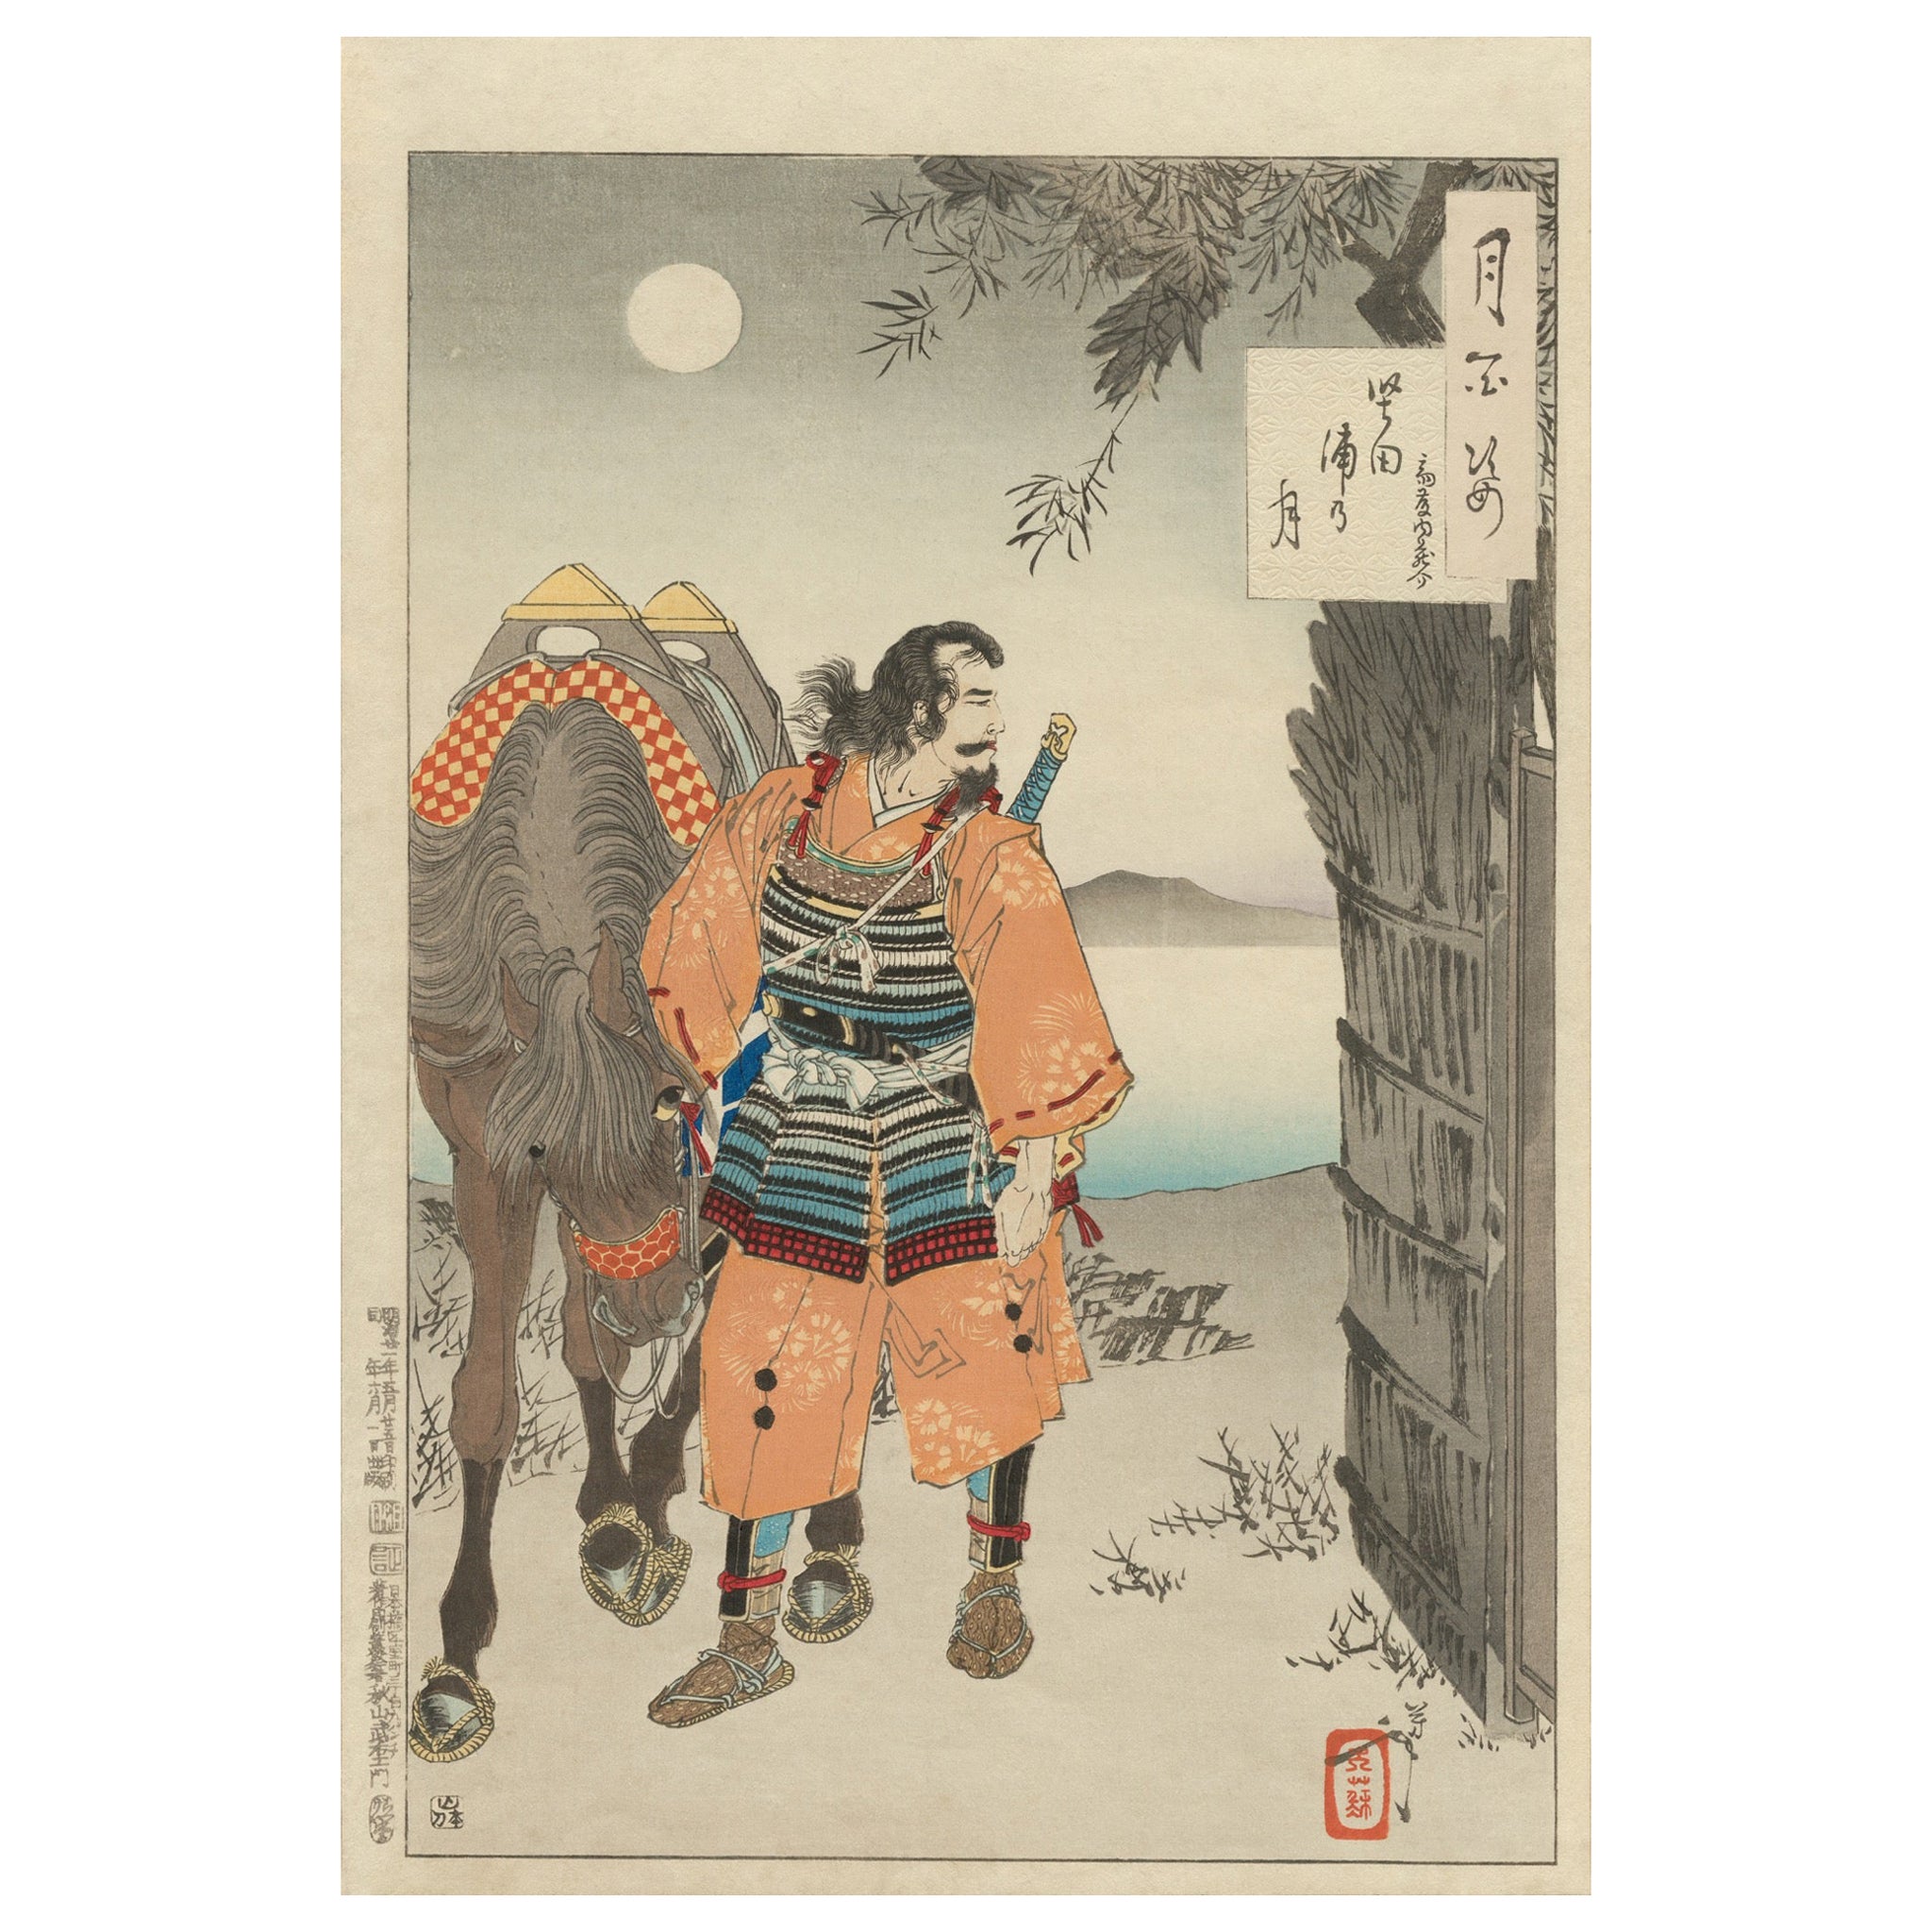 Yoshitoshi Woodblock Print "Katada Bay Moon" 100 Views of the Moon For Sale